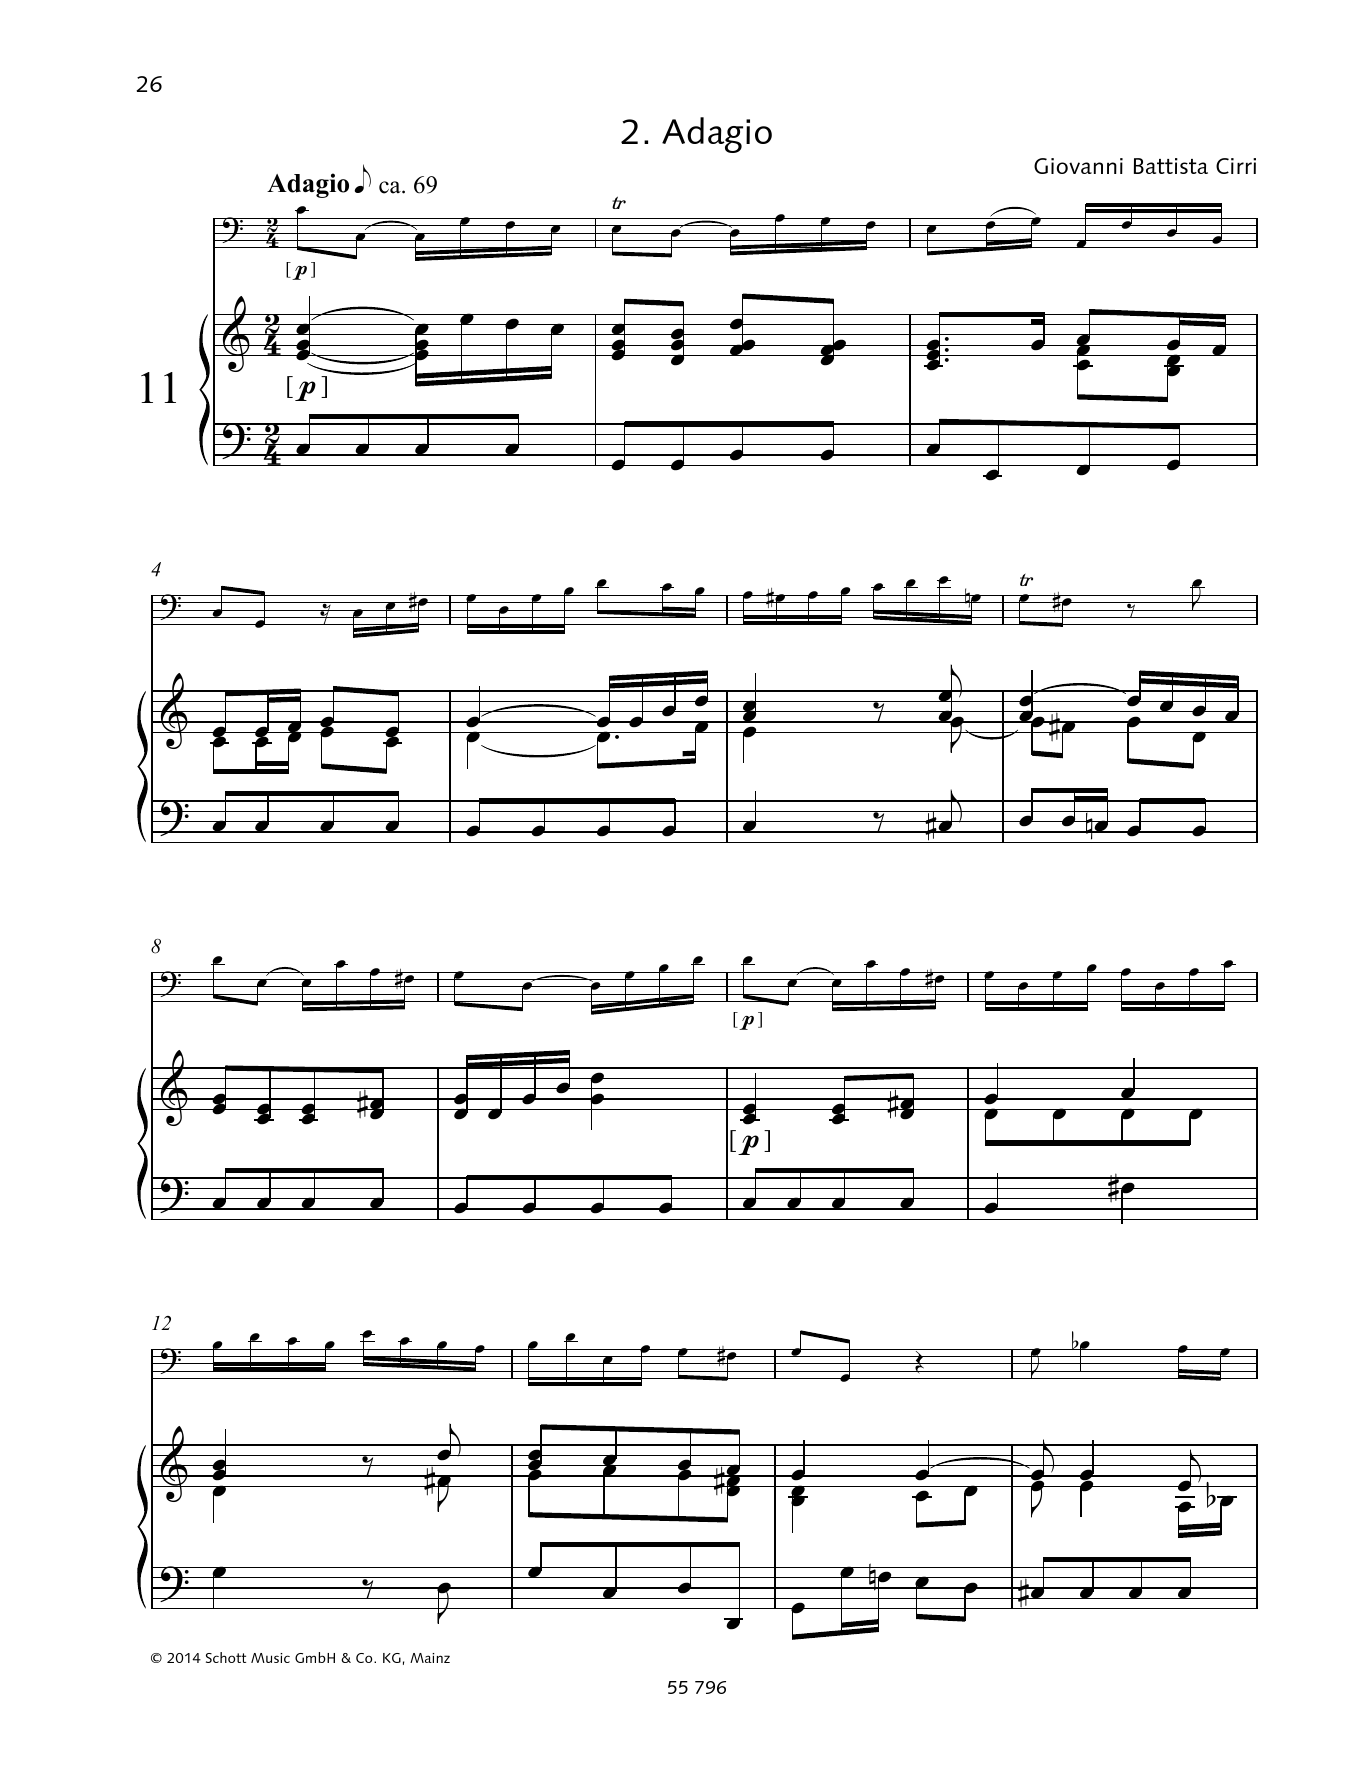 Giovanni Battista Cirri Adagio Sheet Music Notes & Chords for String Solo - Download or Print PDF